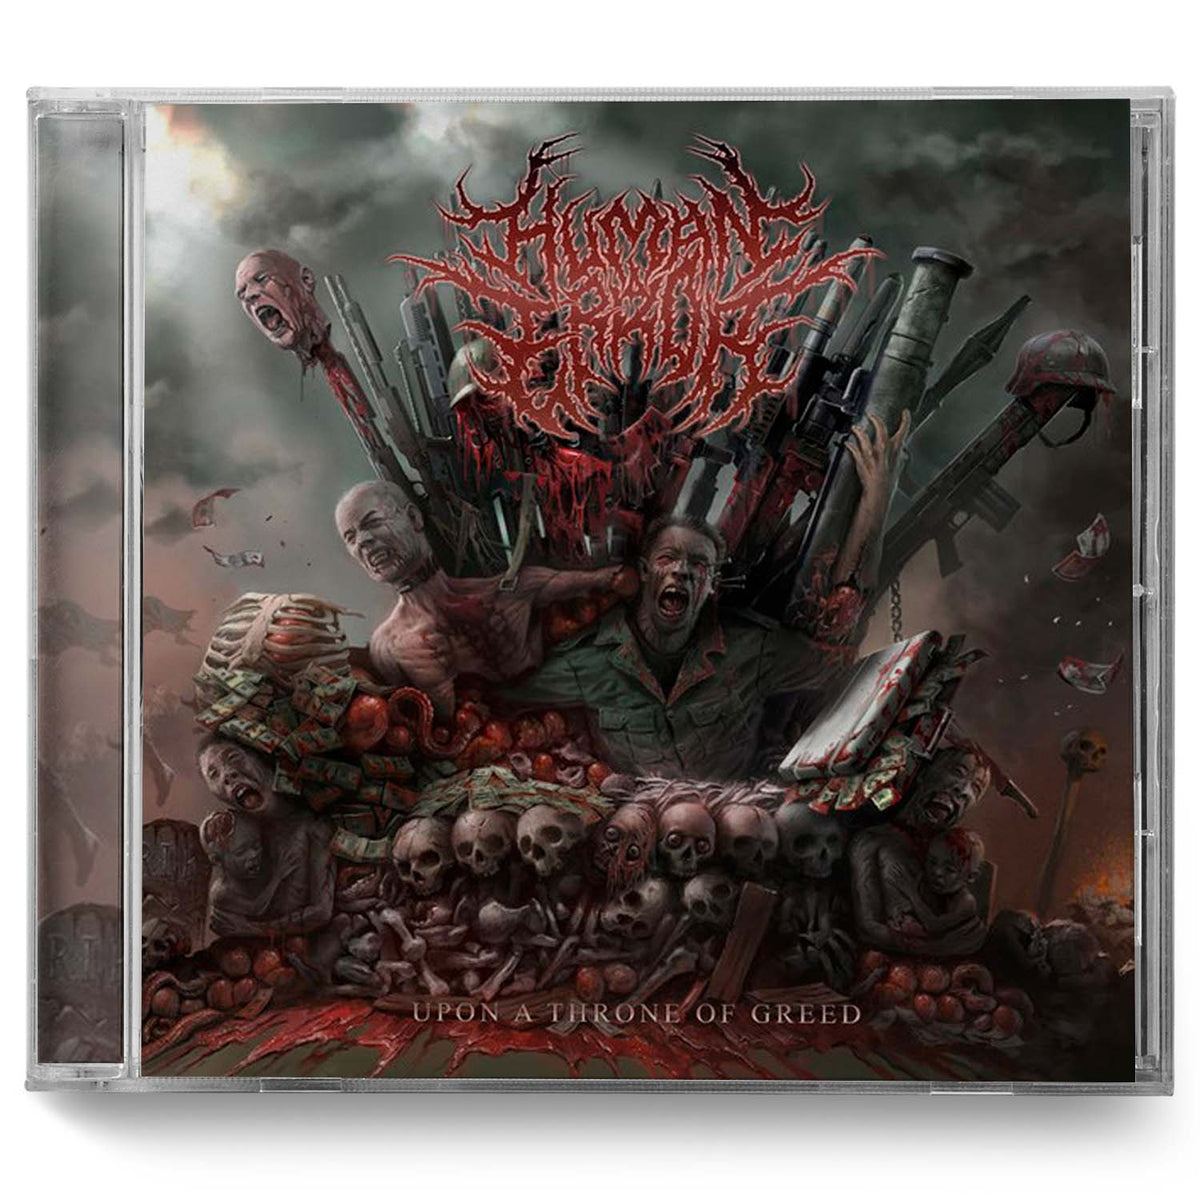 Human Error "Upon A Throne of Greed" CD - Miasma Records